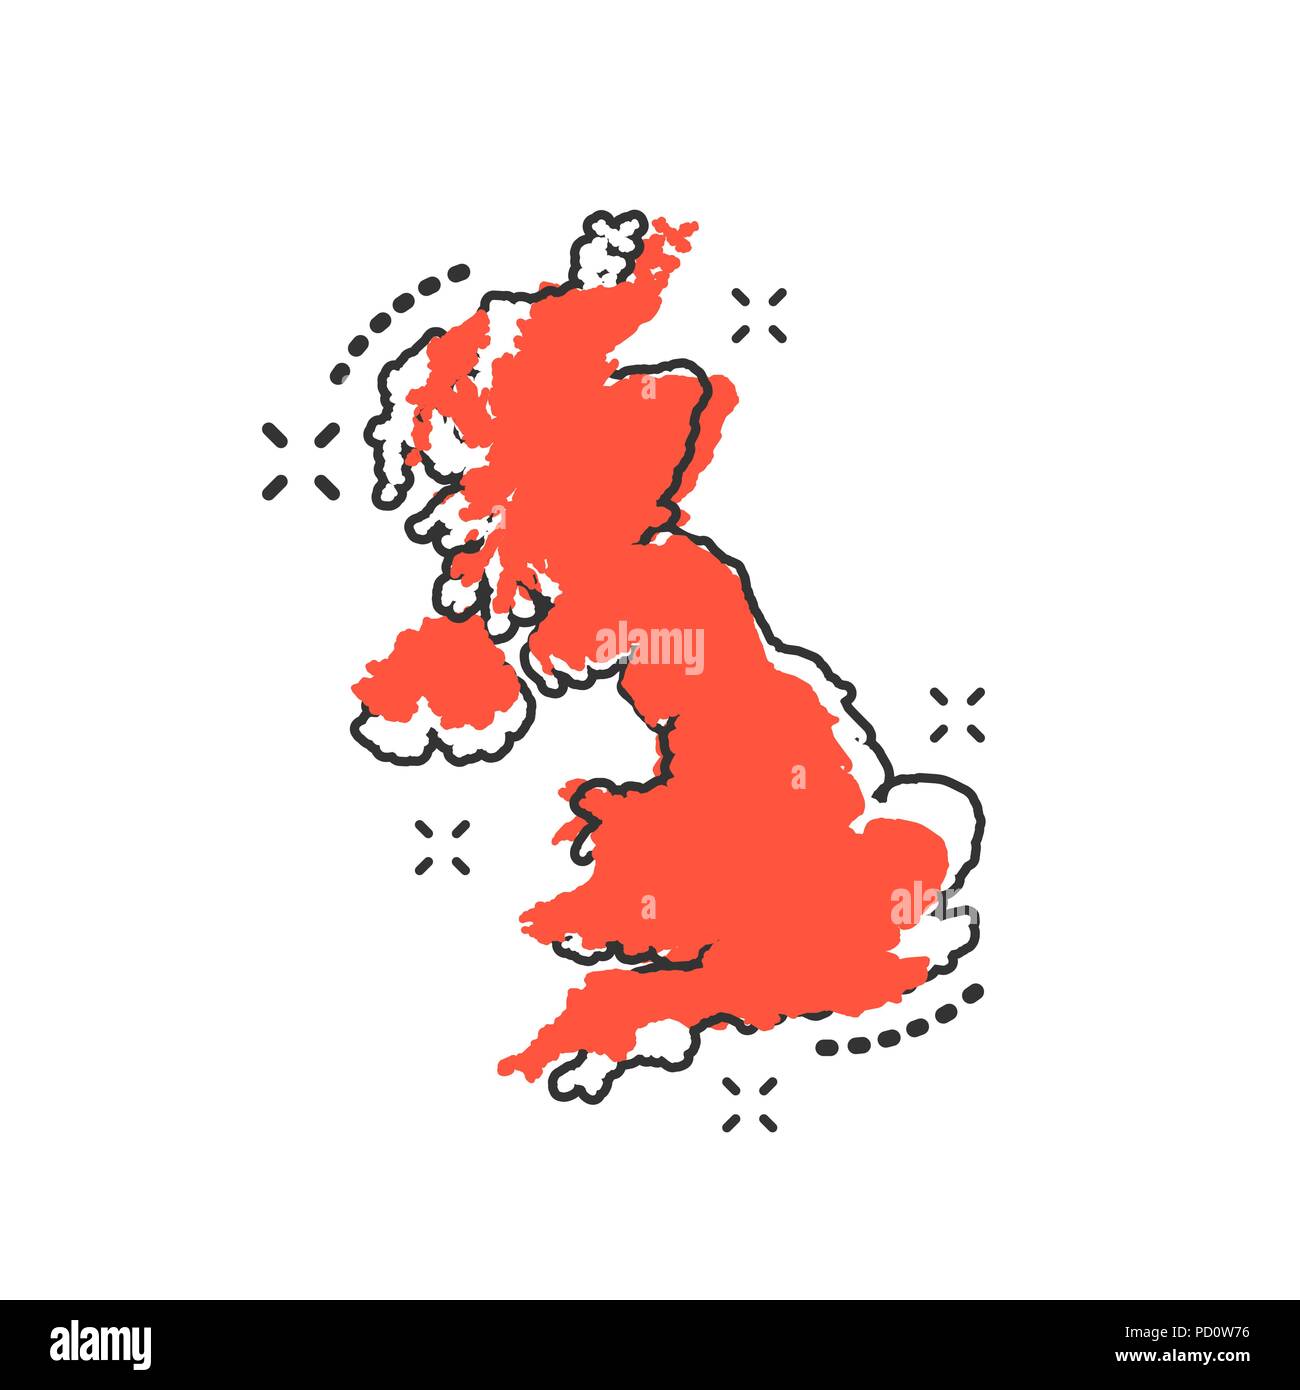 Vektor cartoon Vereinigtes Königreich Symbol Karte im Comic-stil. Vereinigtes Königreich Zeichen Abbildung Piktogramm. Kartographie Karte business splash Wirkung Konzept. Stock Vektor